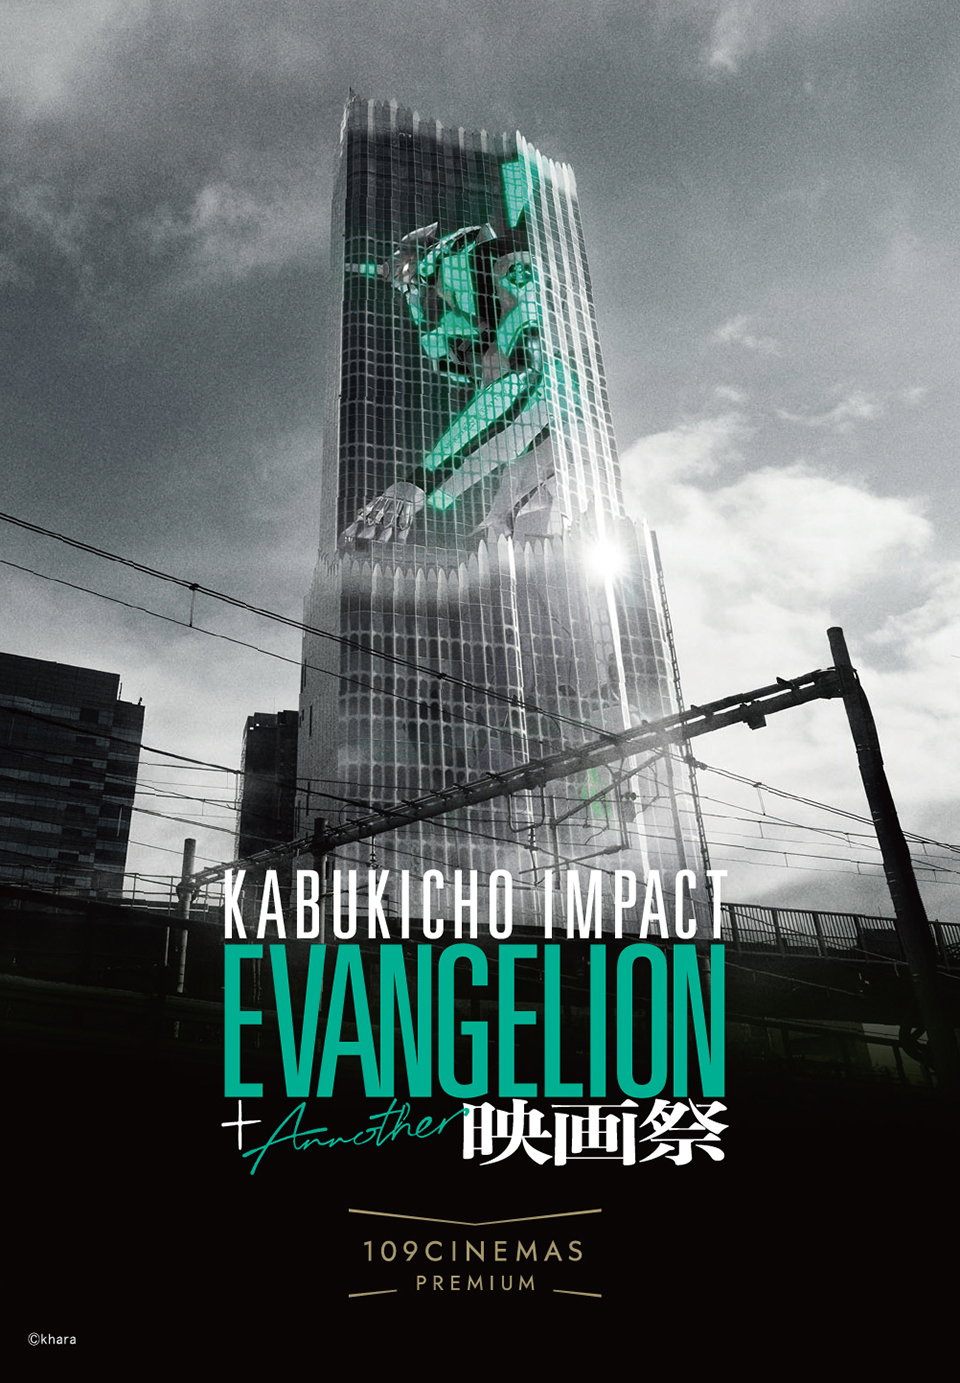 KABUKICHO IMPACT EVANGELION + Another 映画祭 109CINEMAS PREMIUM ©khara